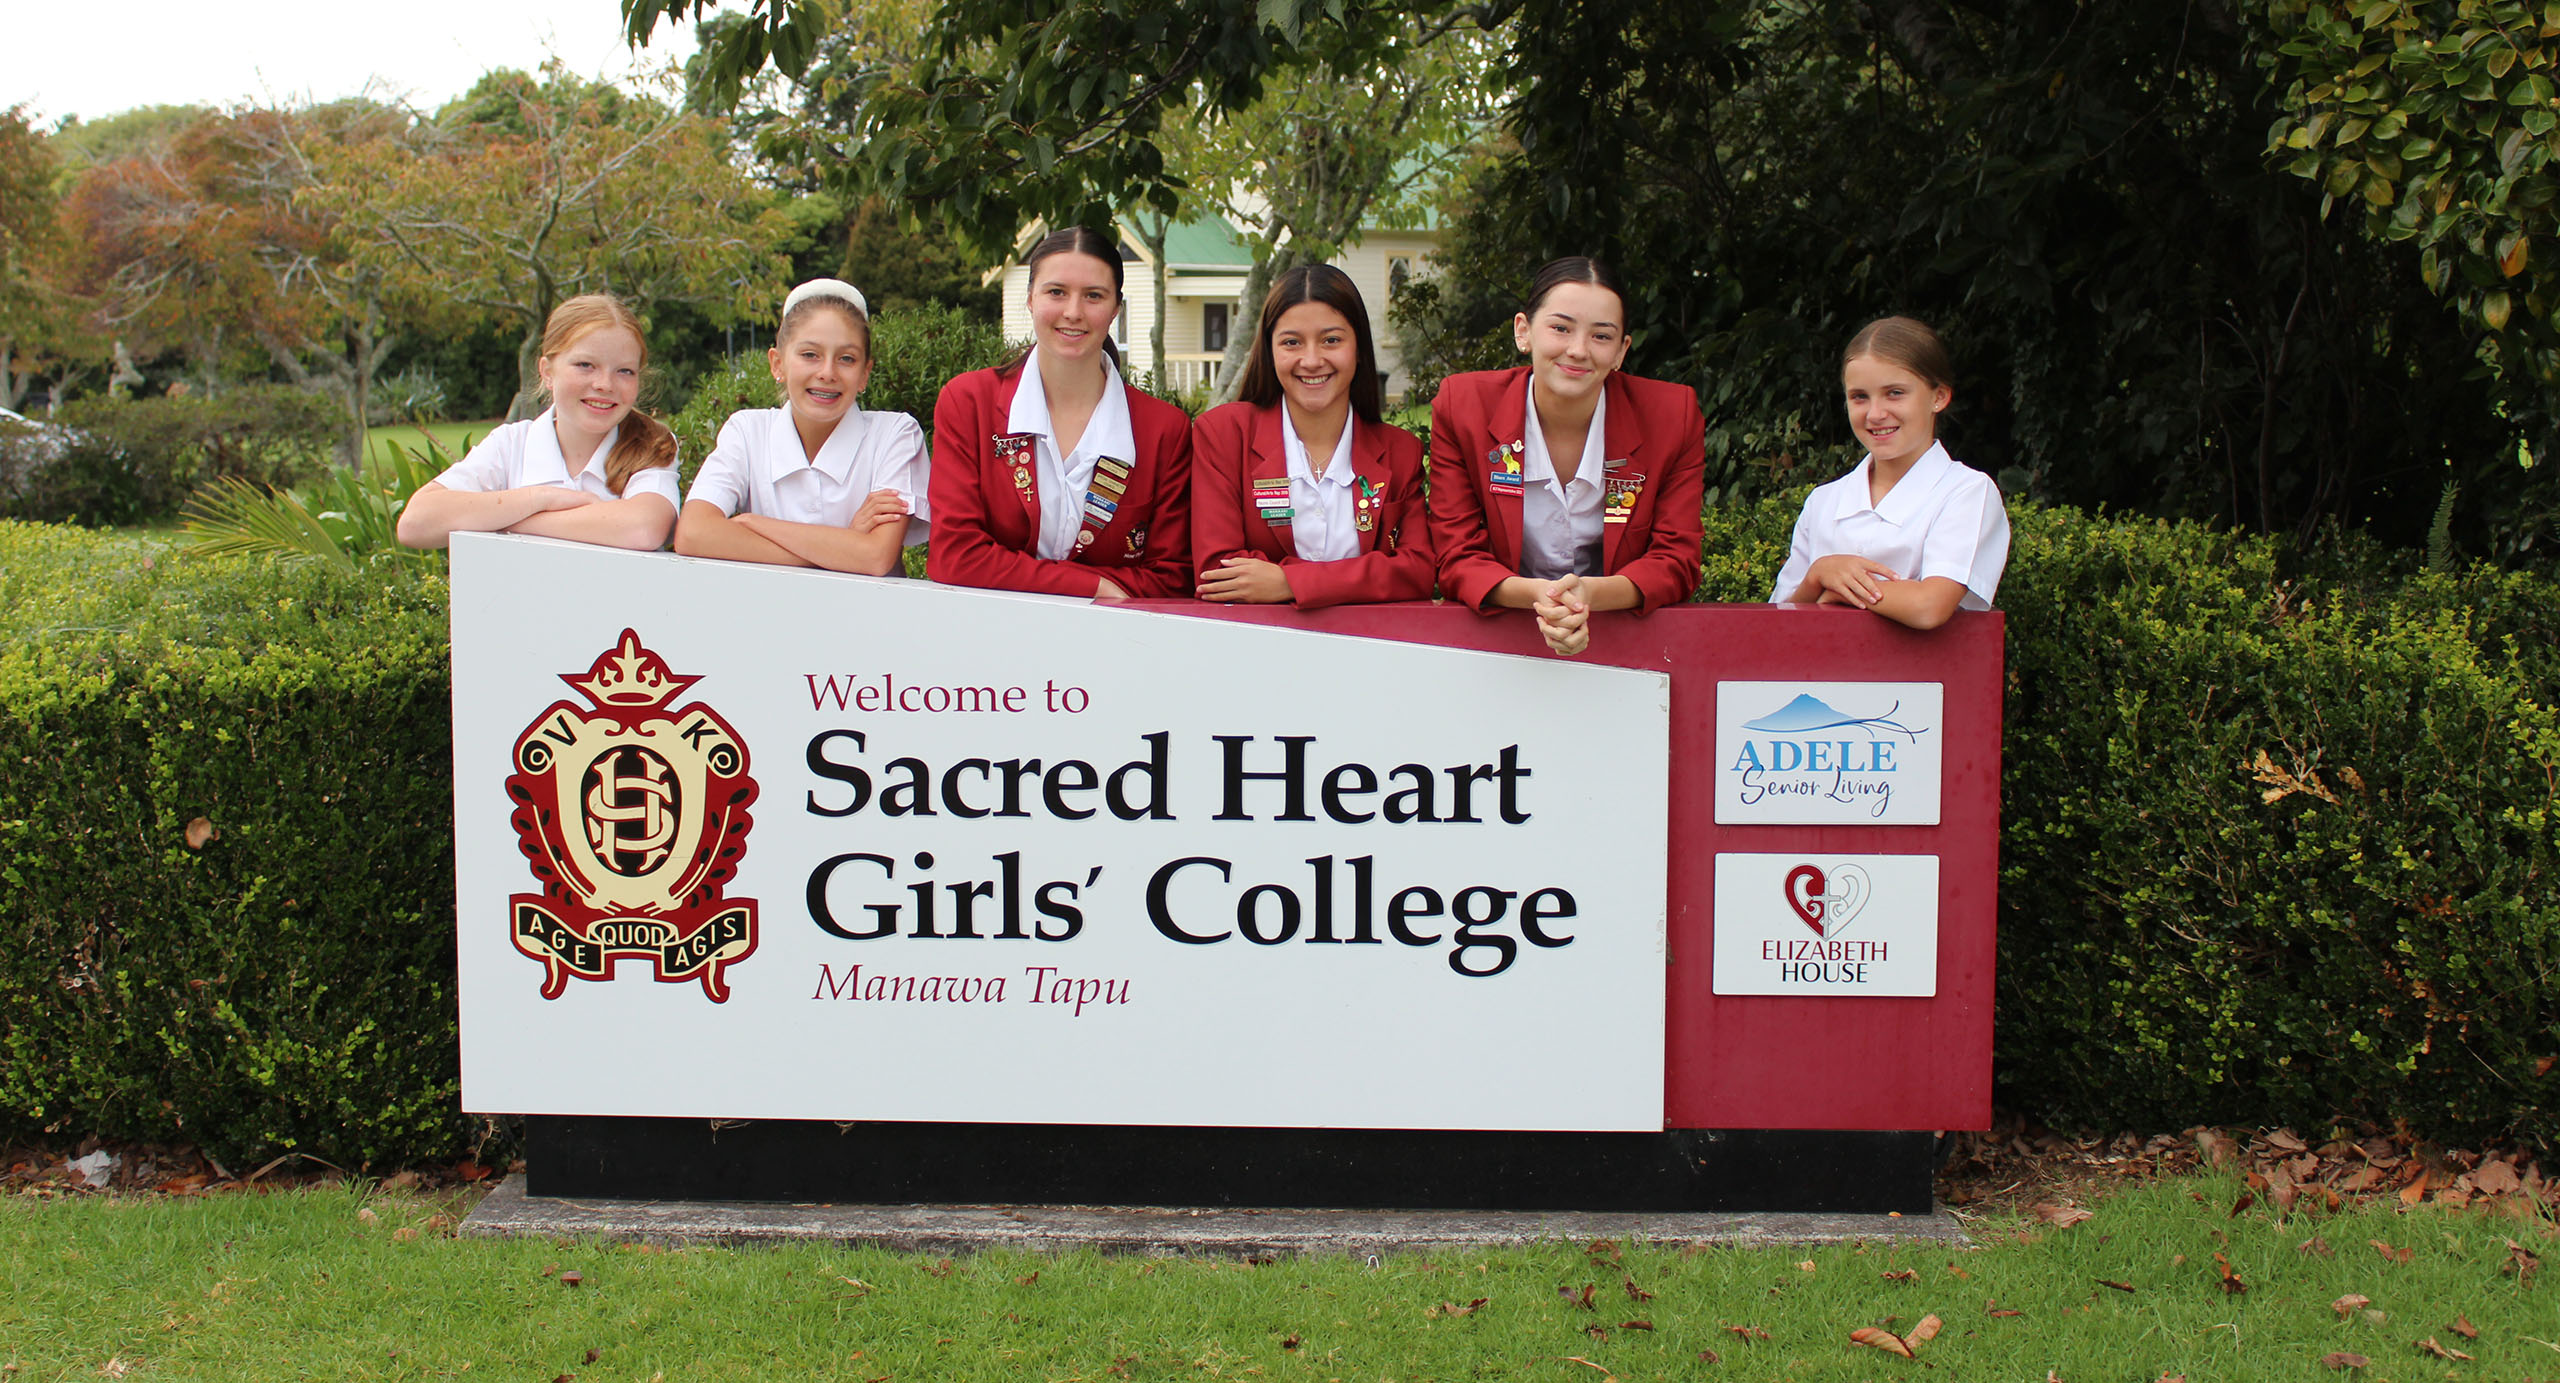 Sacred Heart Girls’ College